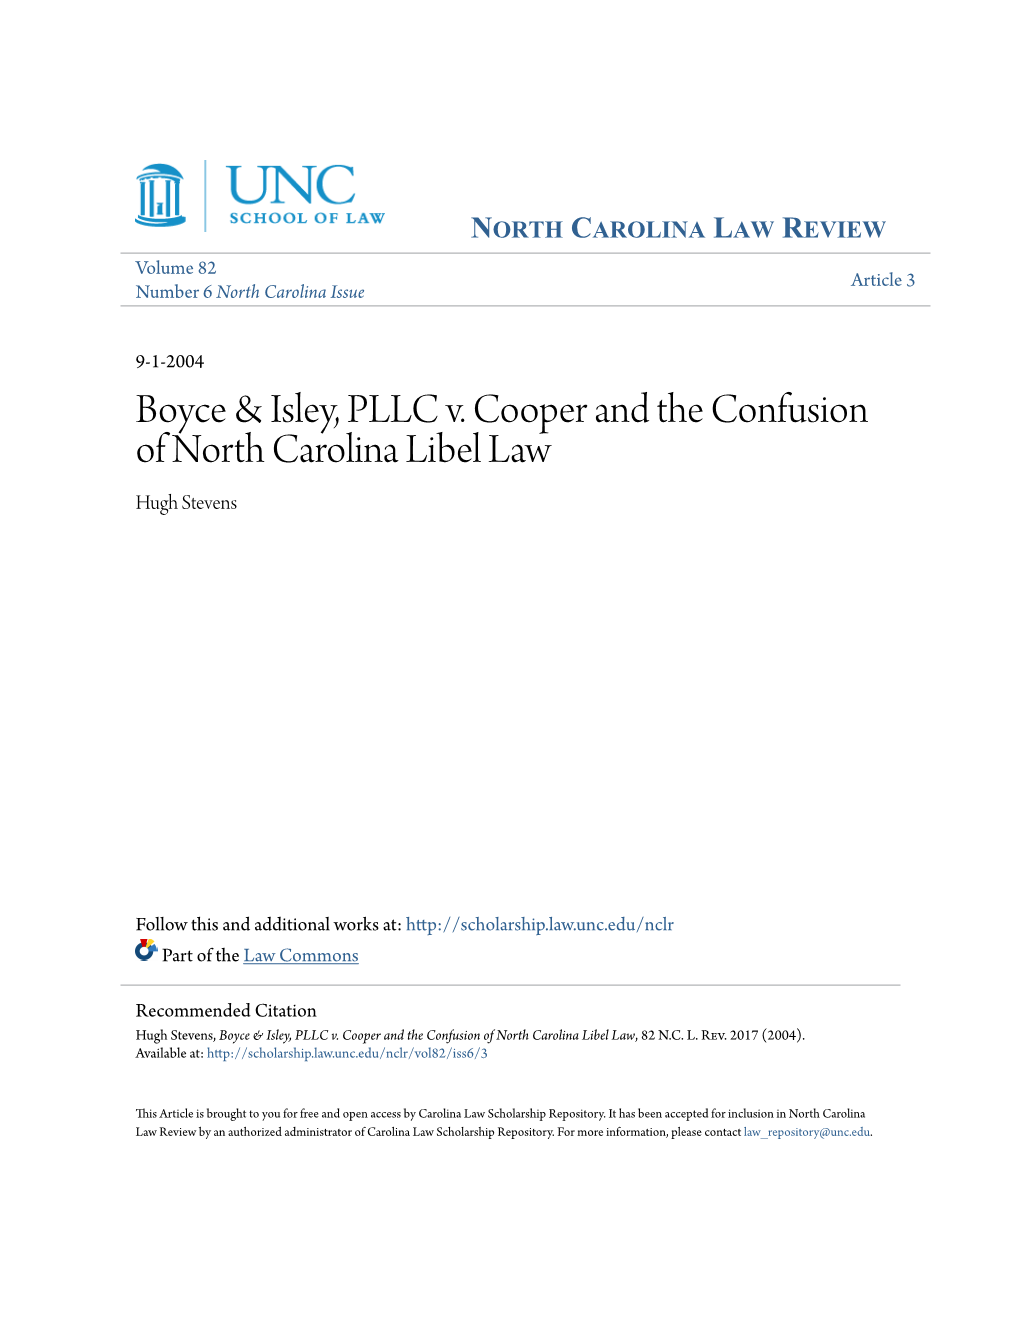 Boyce & Isley, PLLC V. Cooper and the Confusion of North Carolina